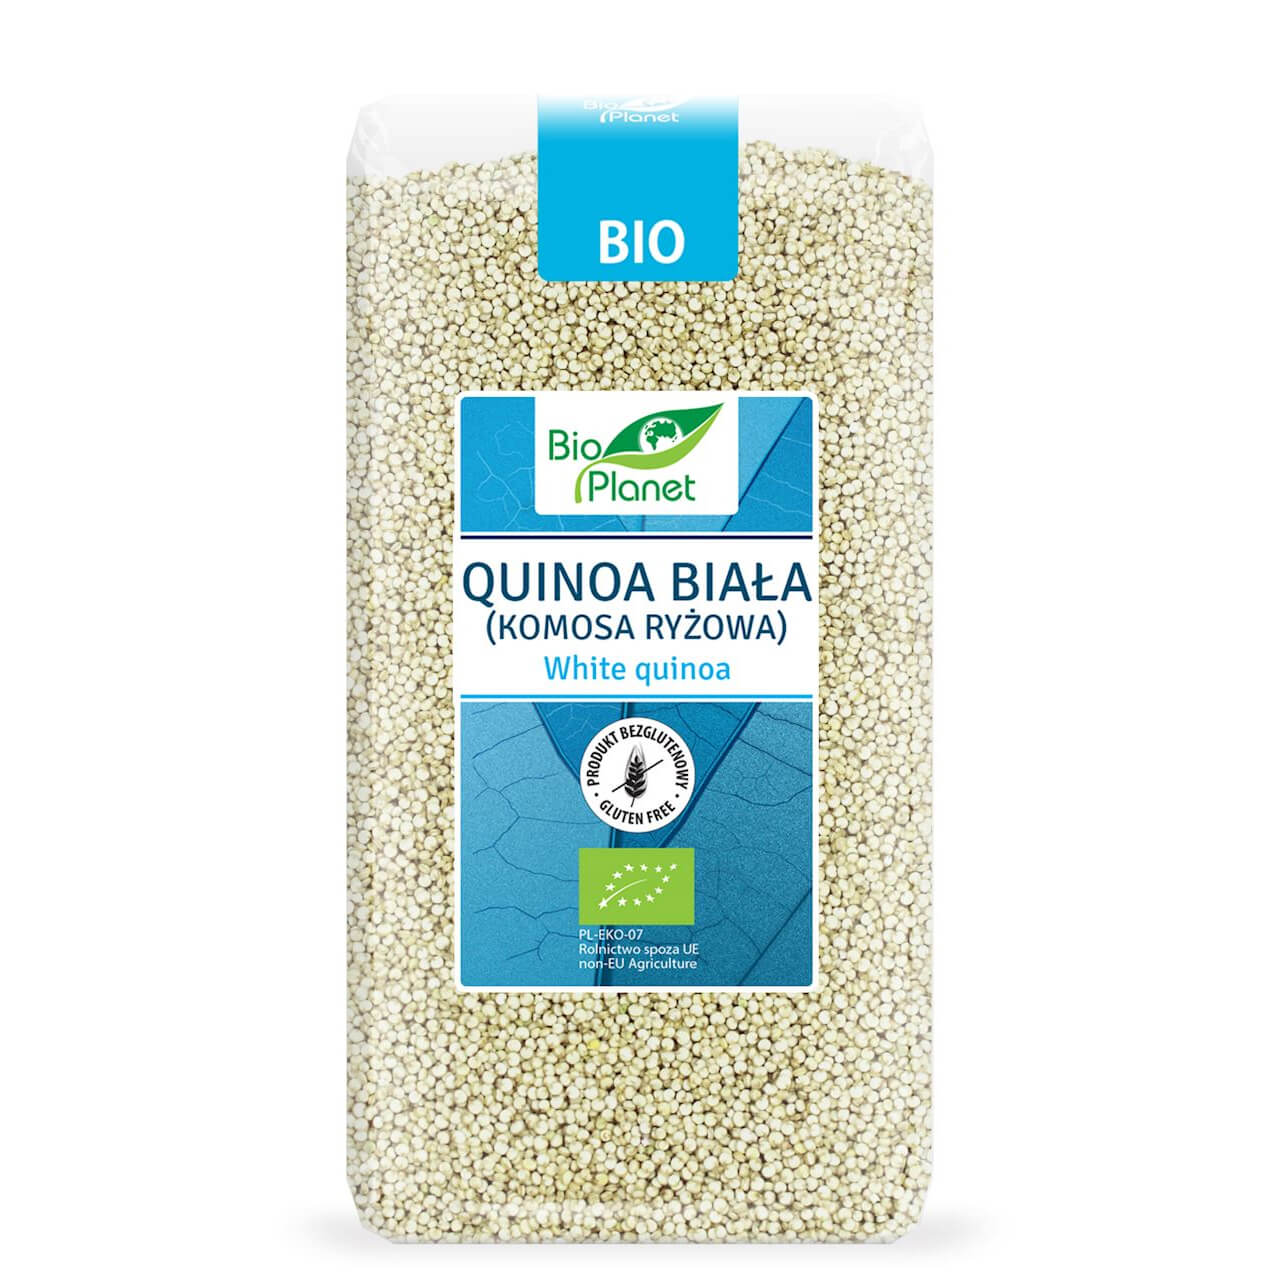 Quinoa biała (komosa ryżowa) BIO 500 g - Bio Planet